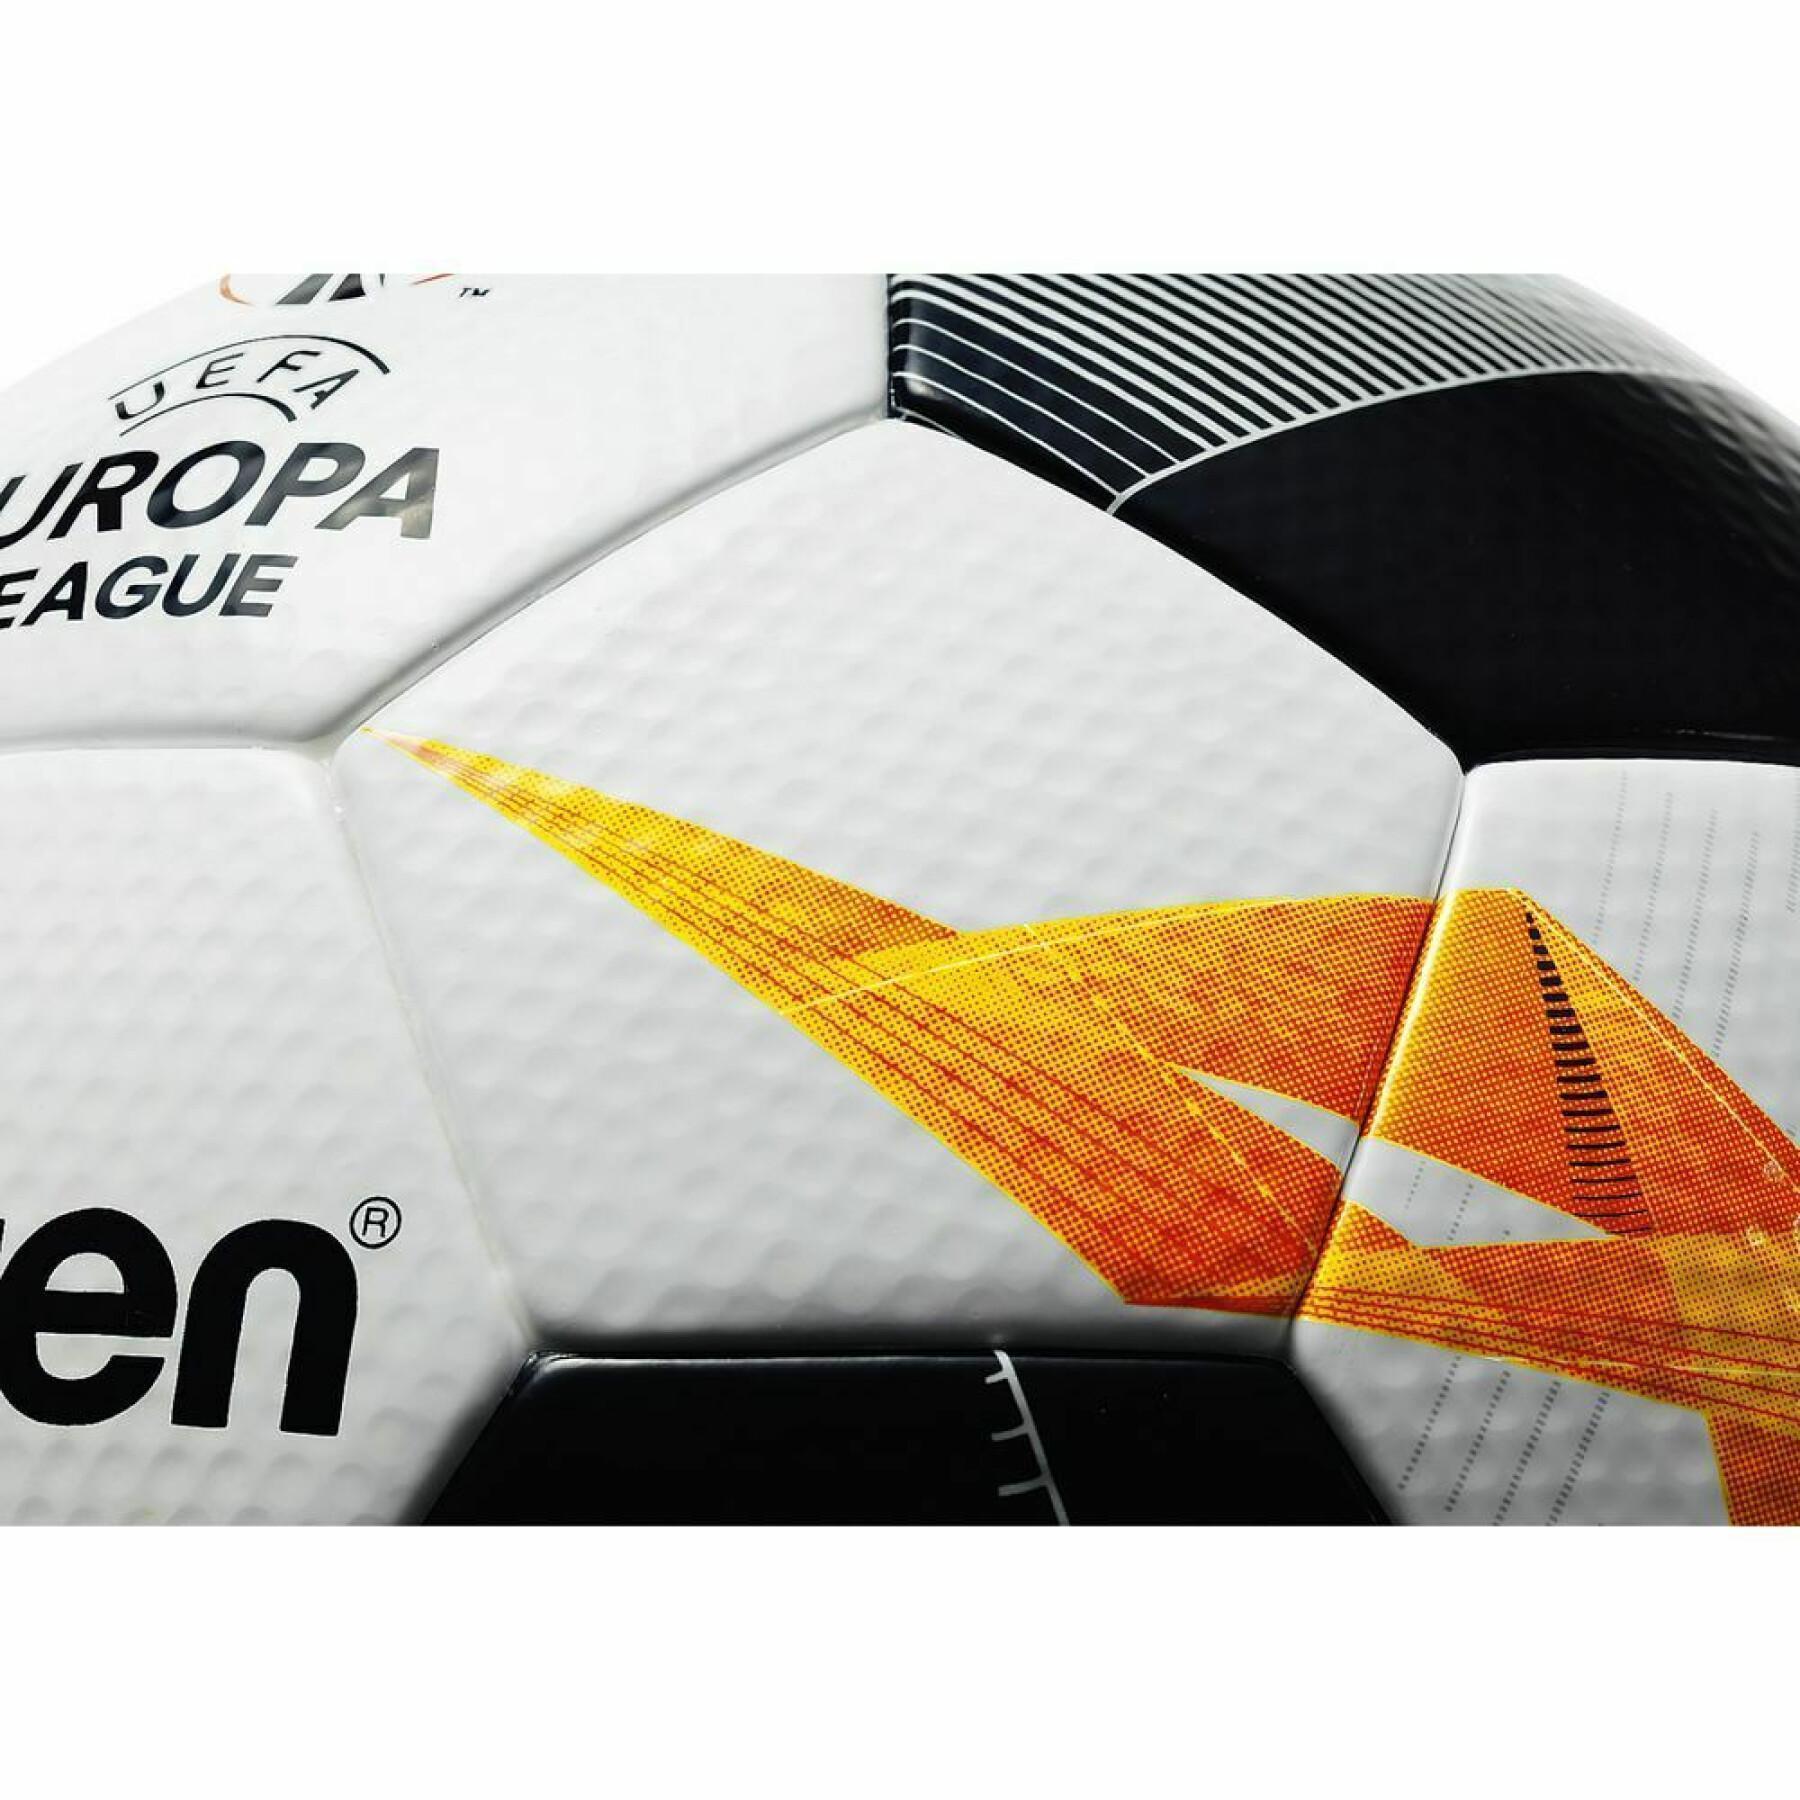 Ballon authentique Molten UEFA 2019/20